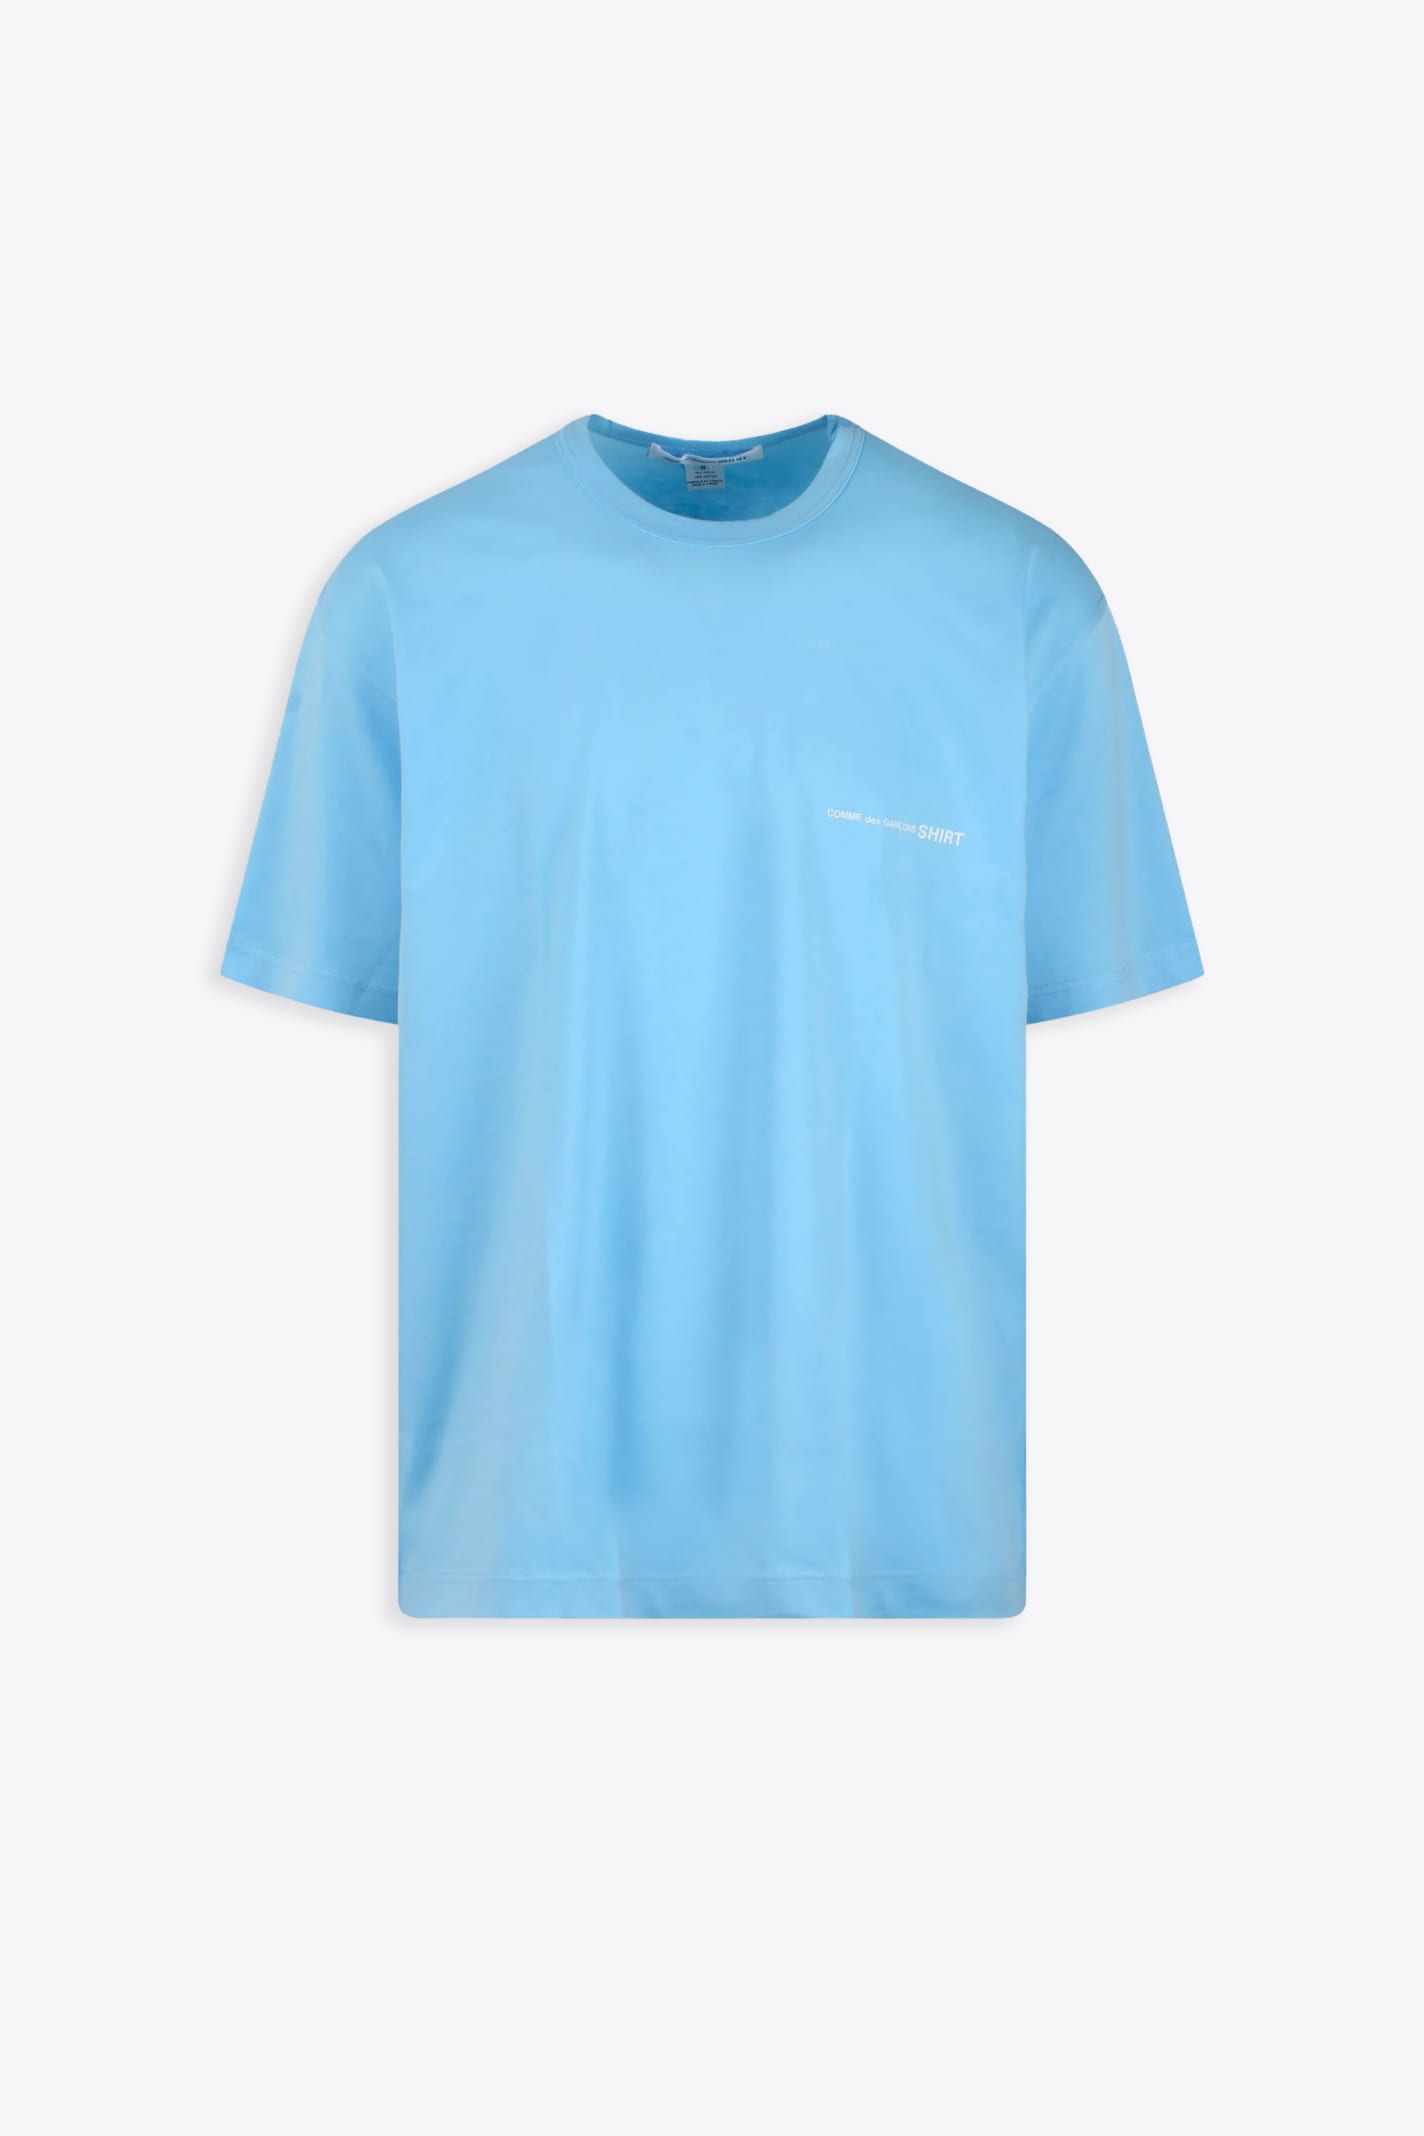 Mens T-shirt Knit Sky blue cotton oversize t-shirt with chest logo